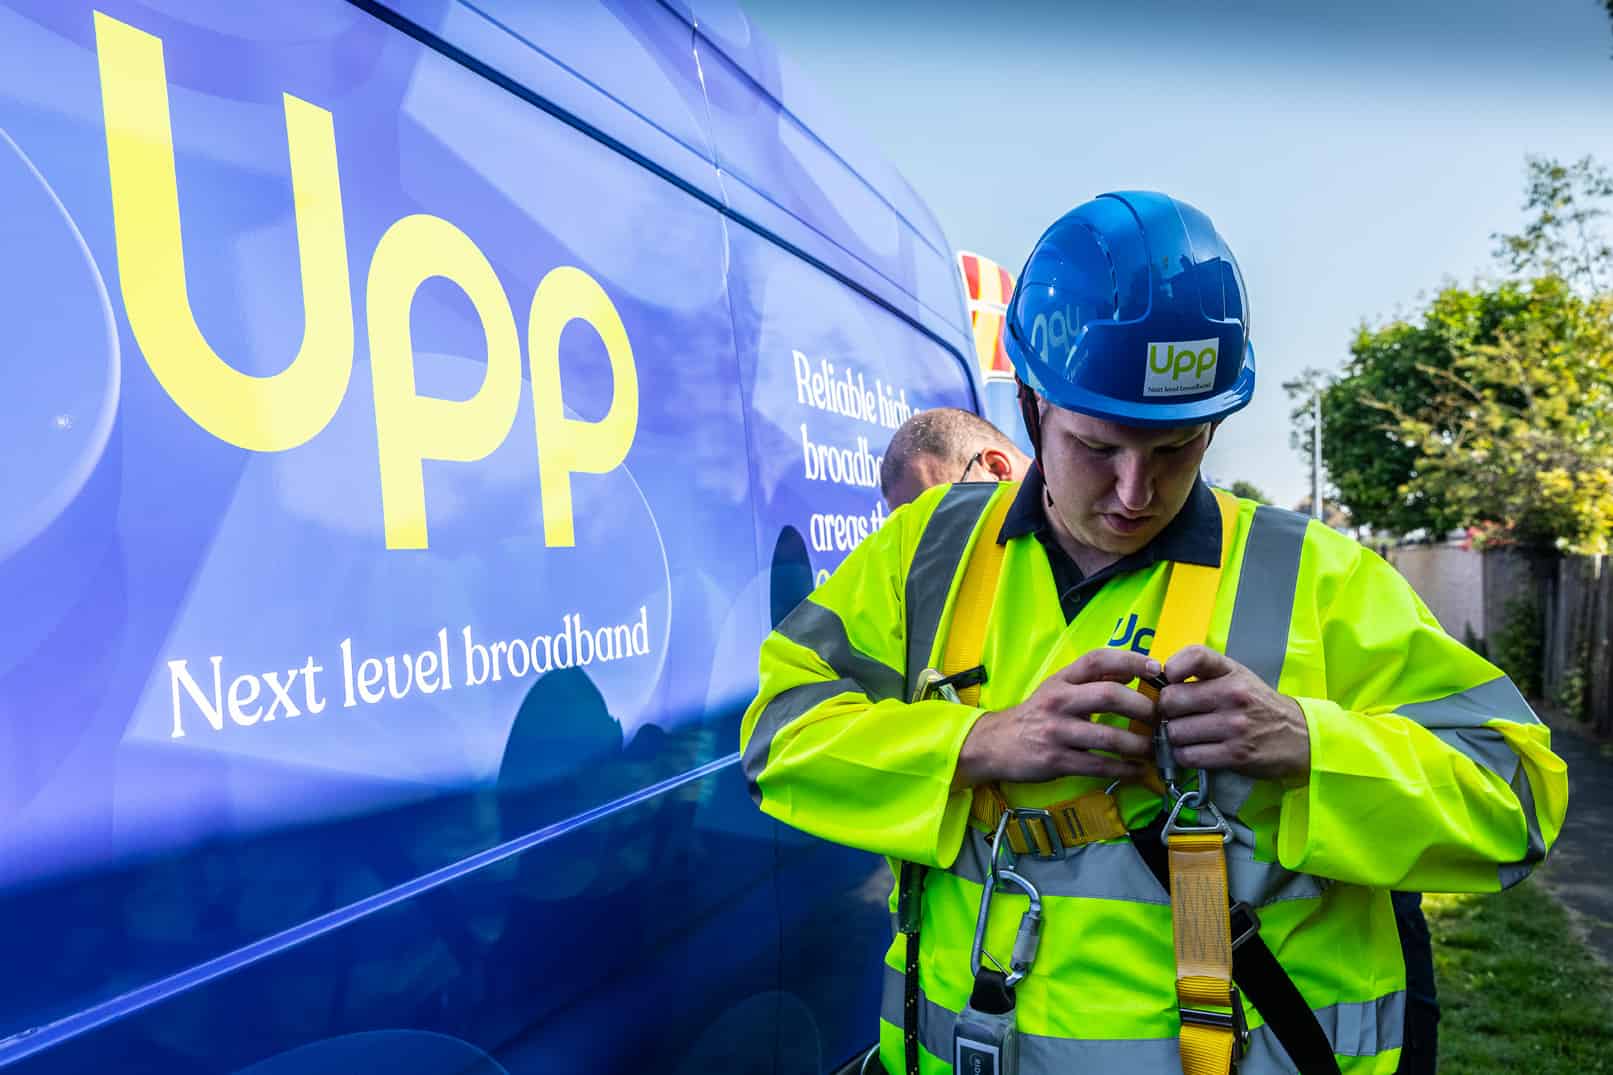 UPP Broadband sponsor of Zero Degrees